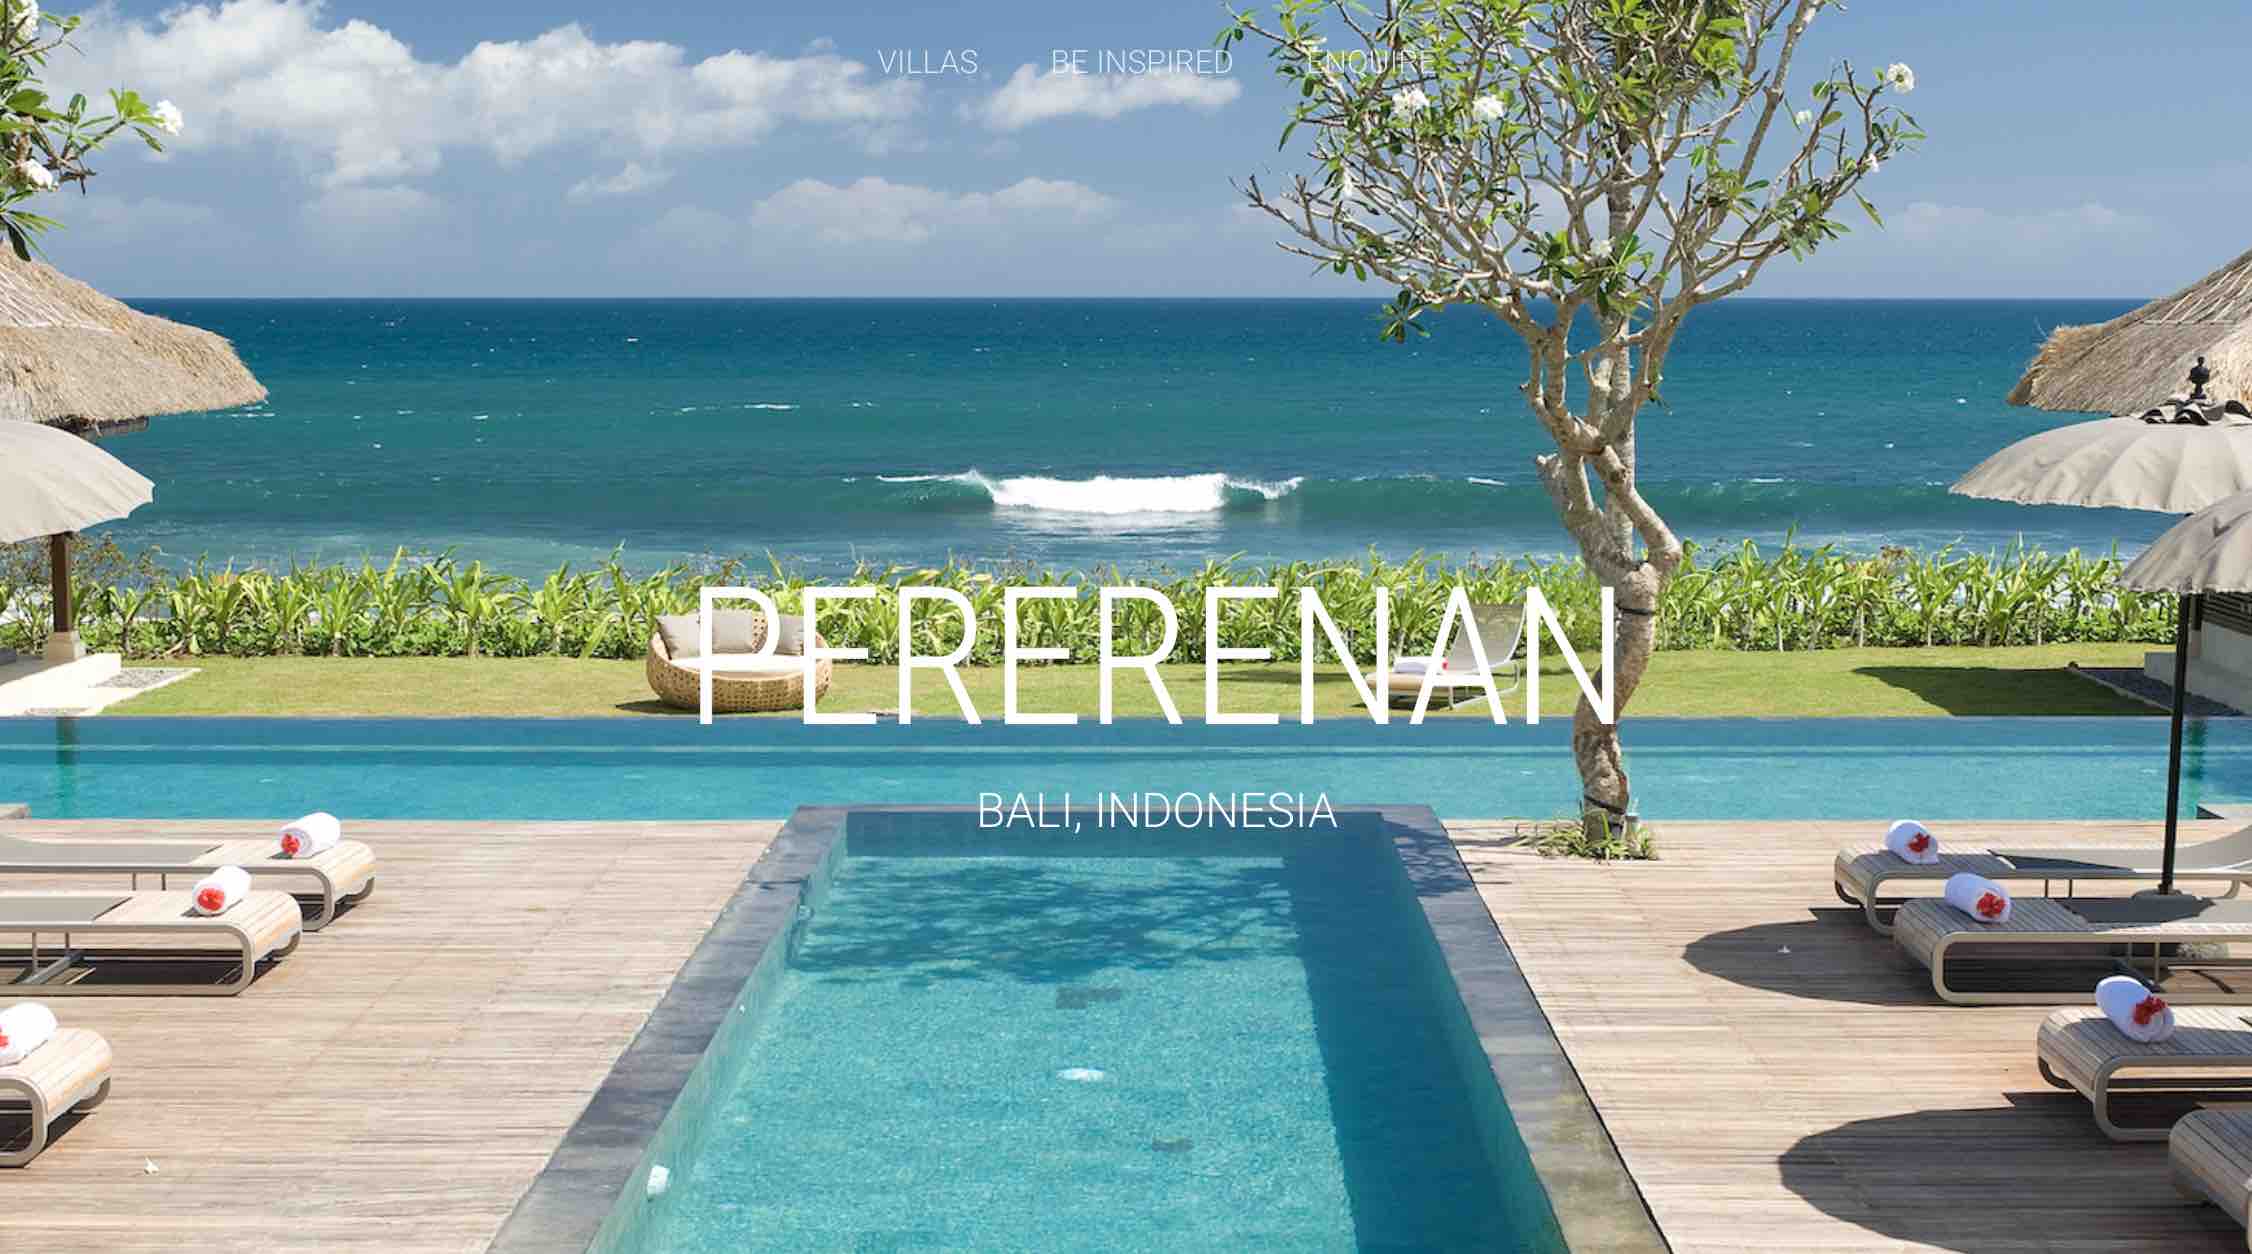 Pererenan Travel Guide